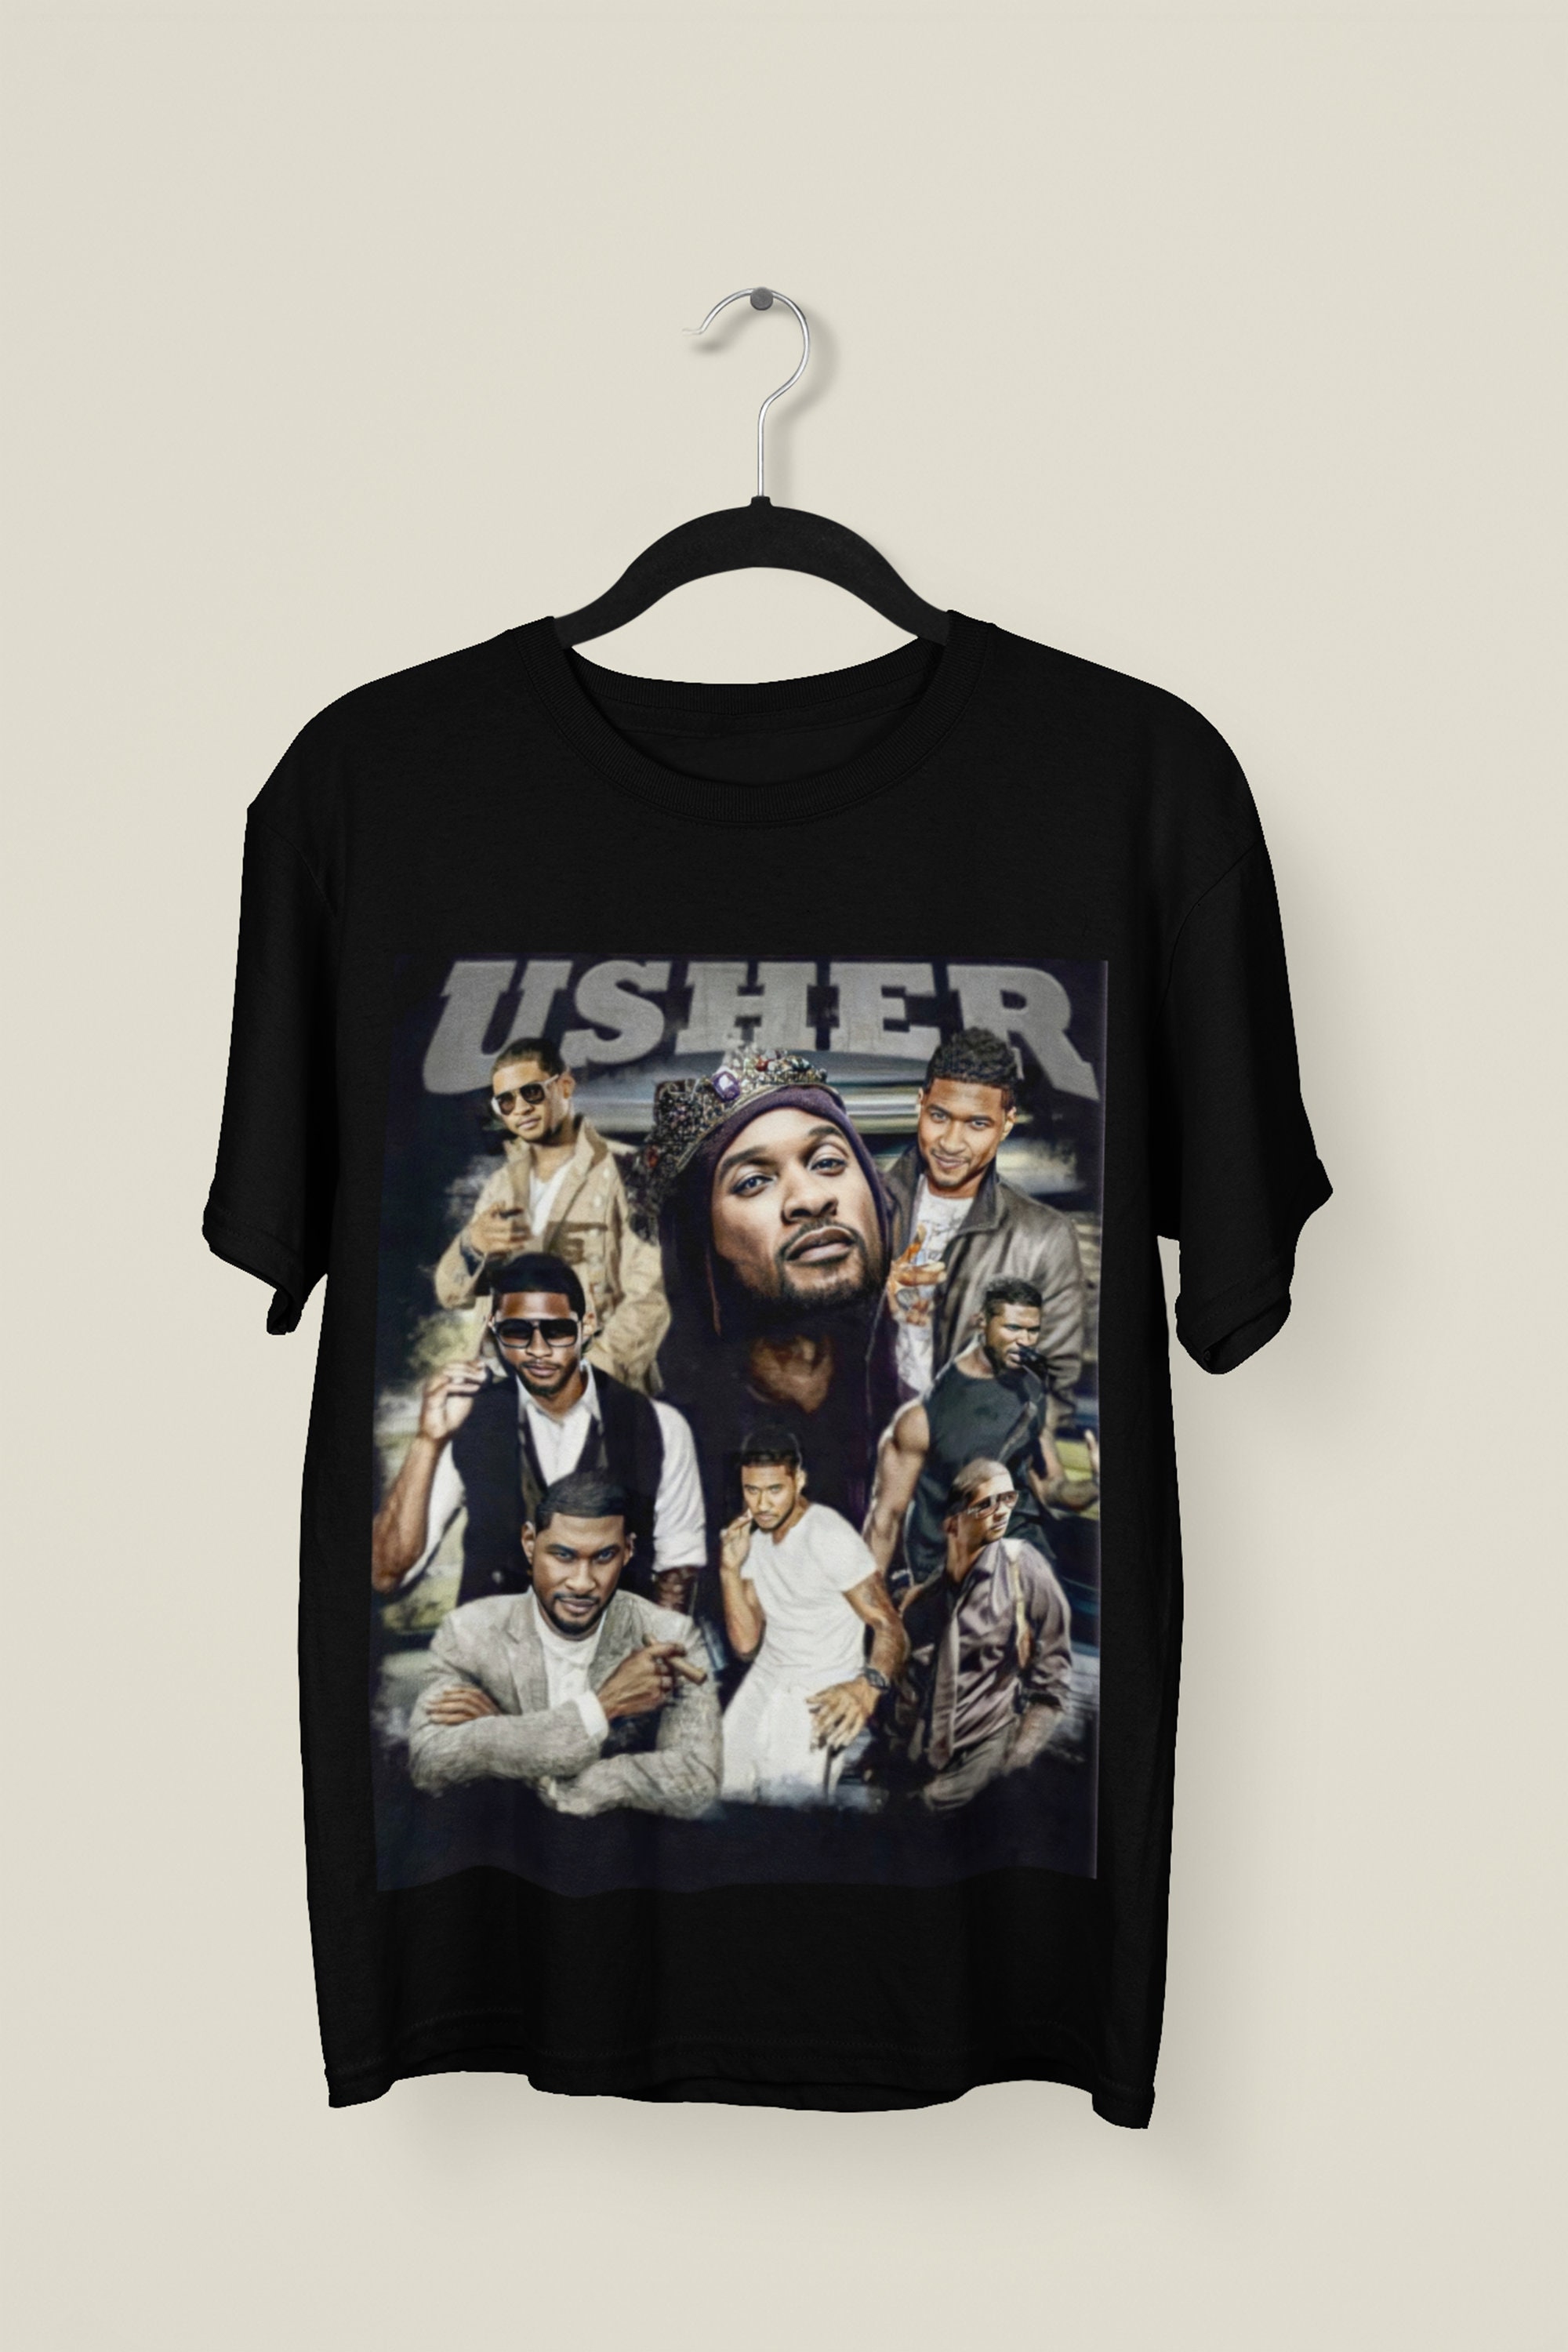 Usher Vintage 90s Shirt| Usher 90s Style Bootleg Rap Tee